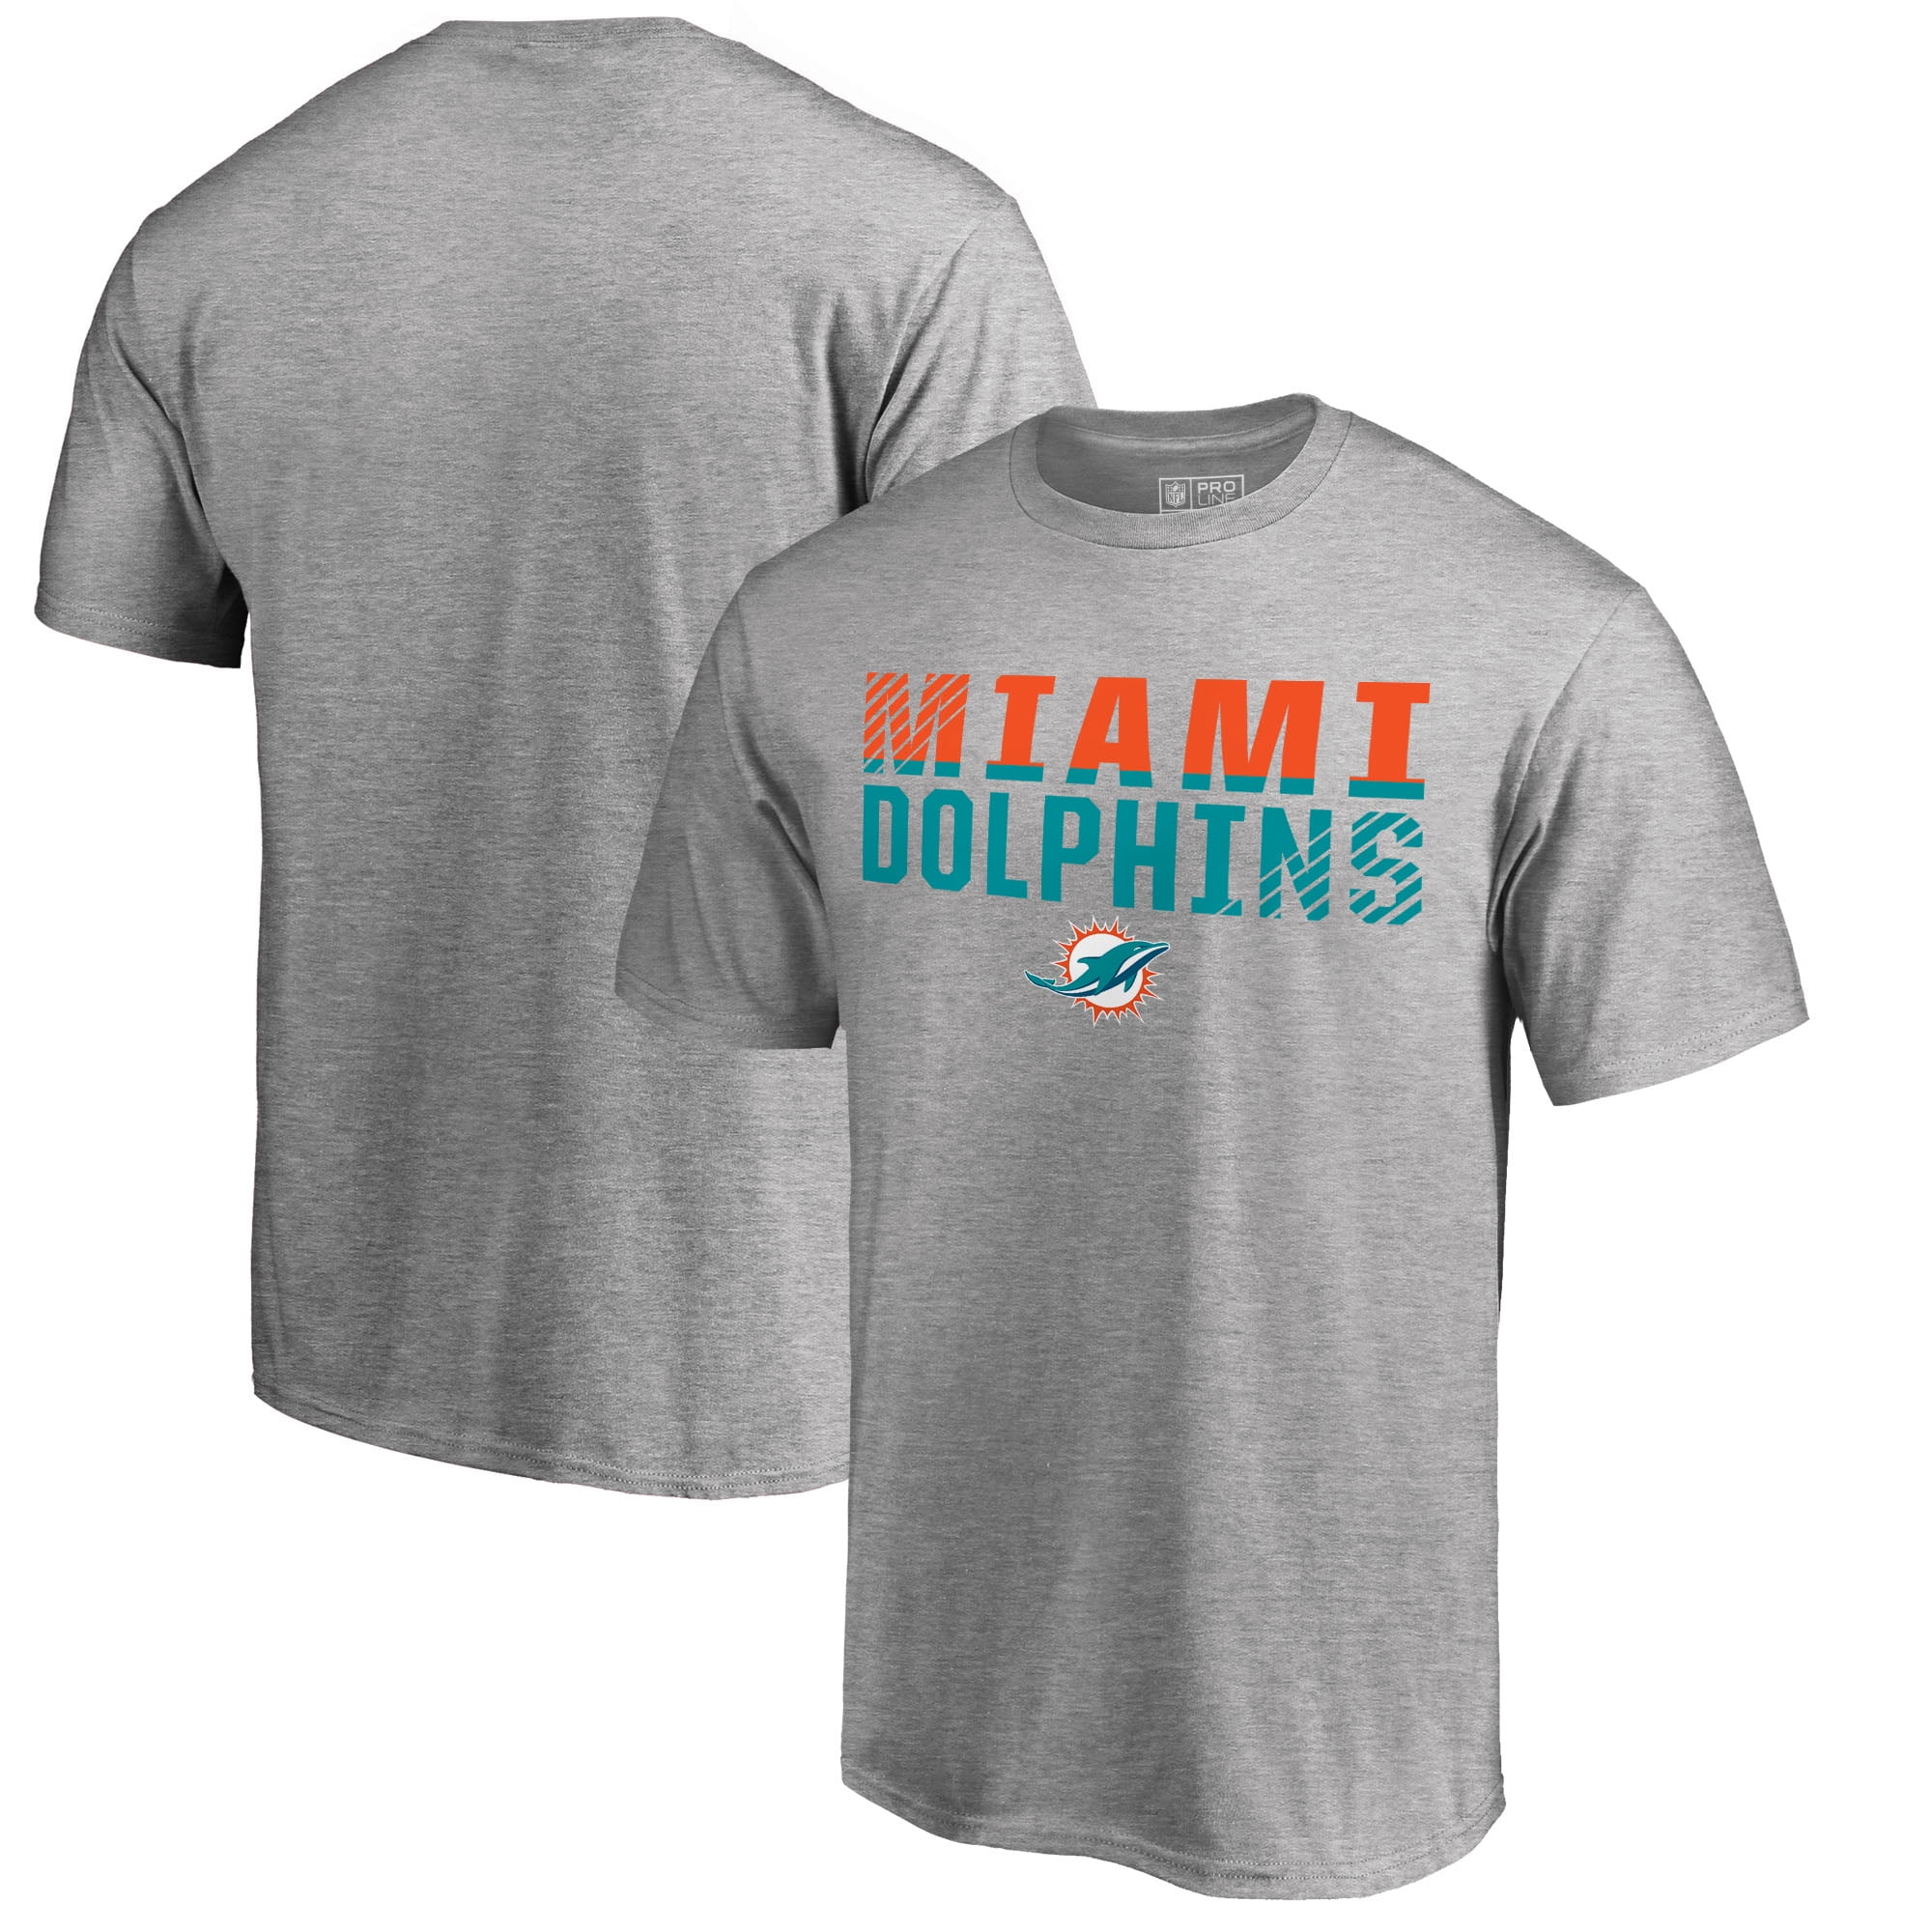 miami dolphins t shirts walmart